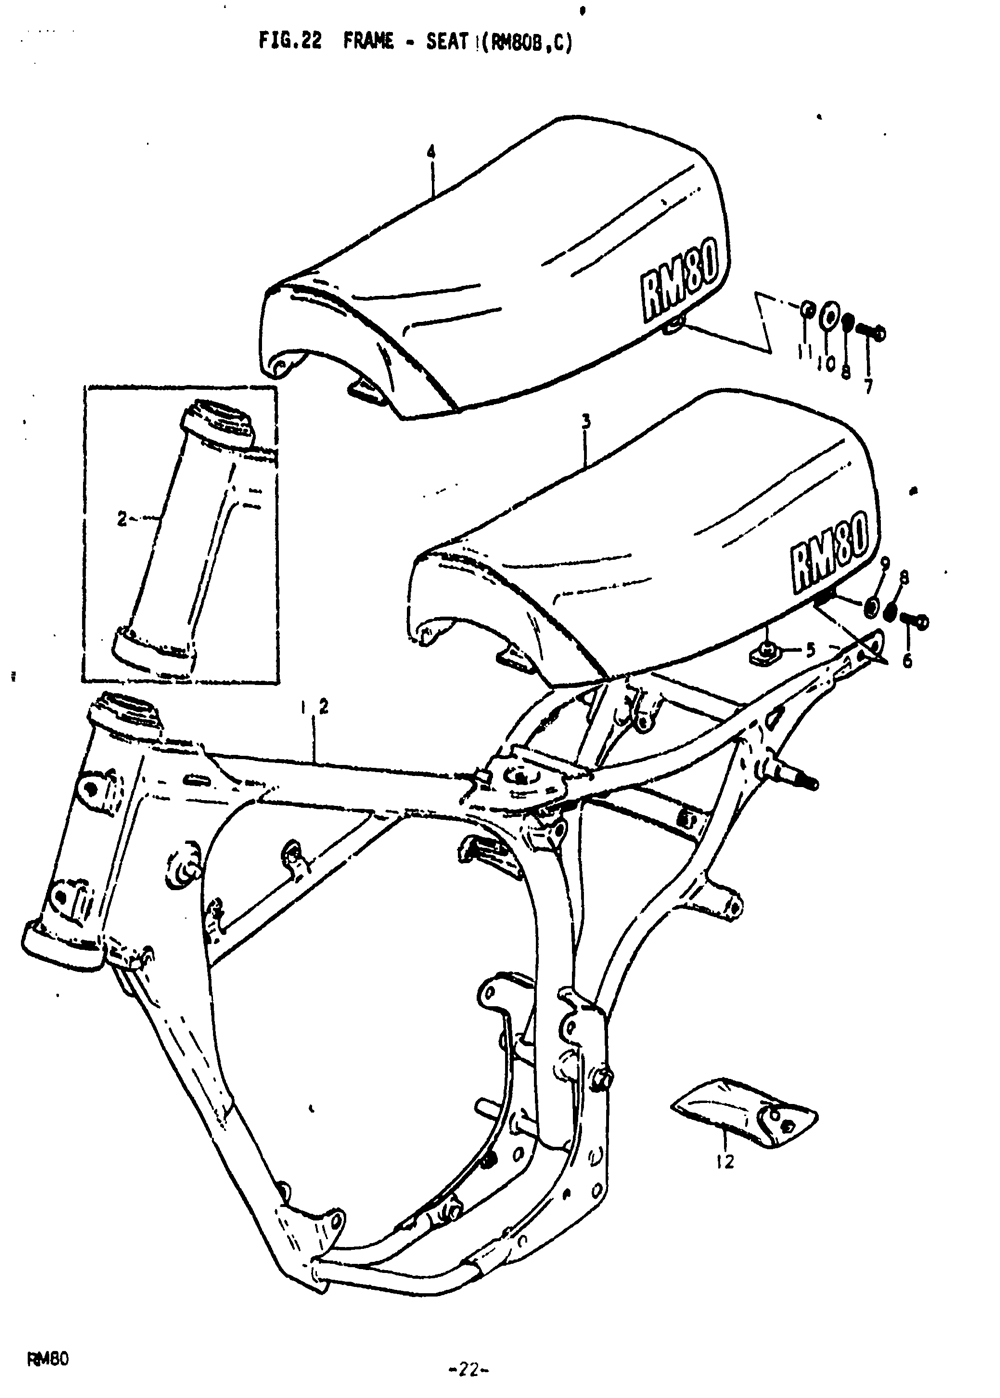 Frame - seat (rm80b